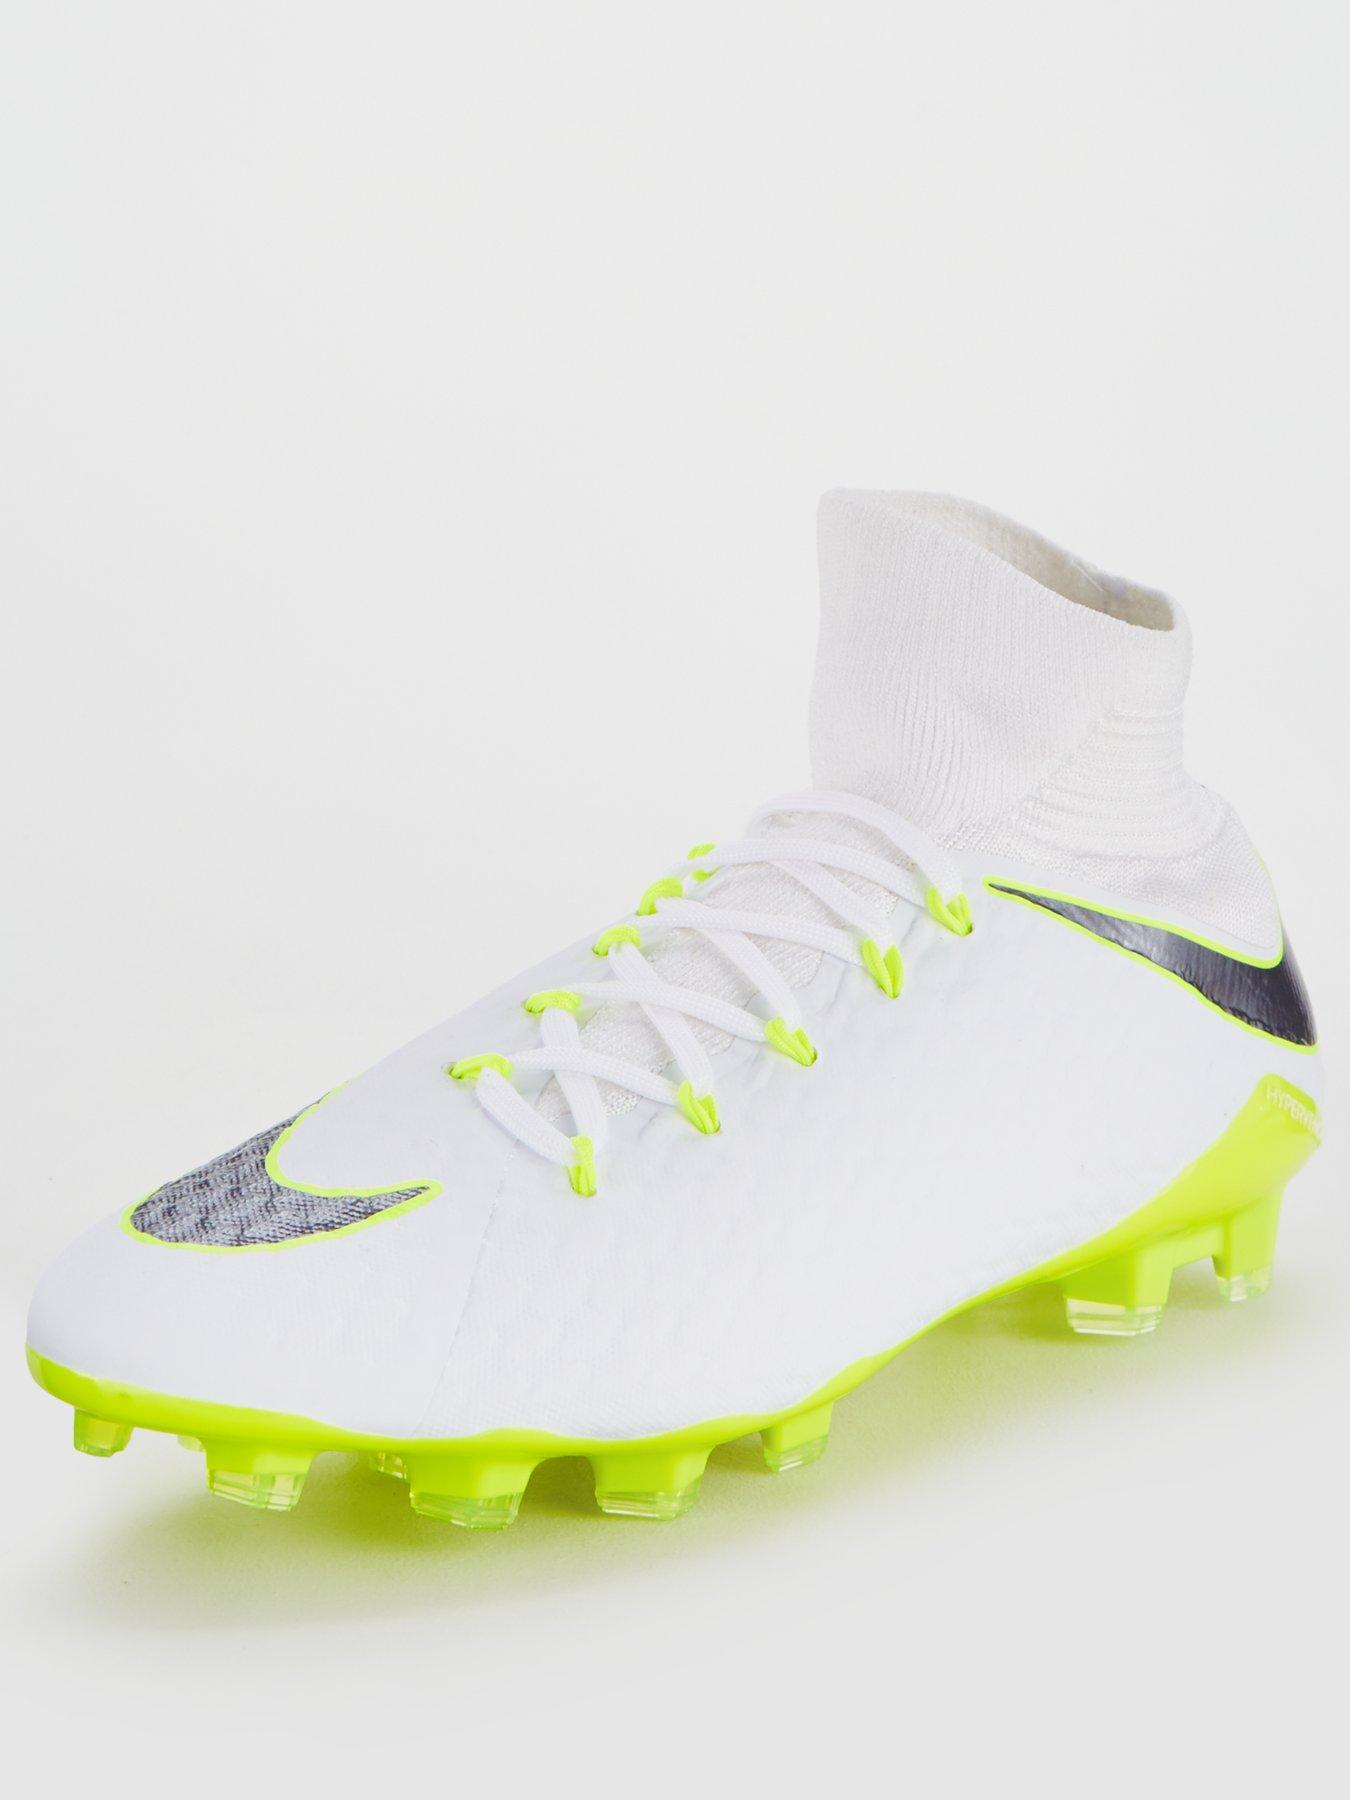 Nike Hypervenom Phantom III Motion Blur FG Soccer Boots High